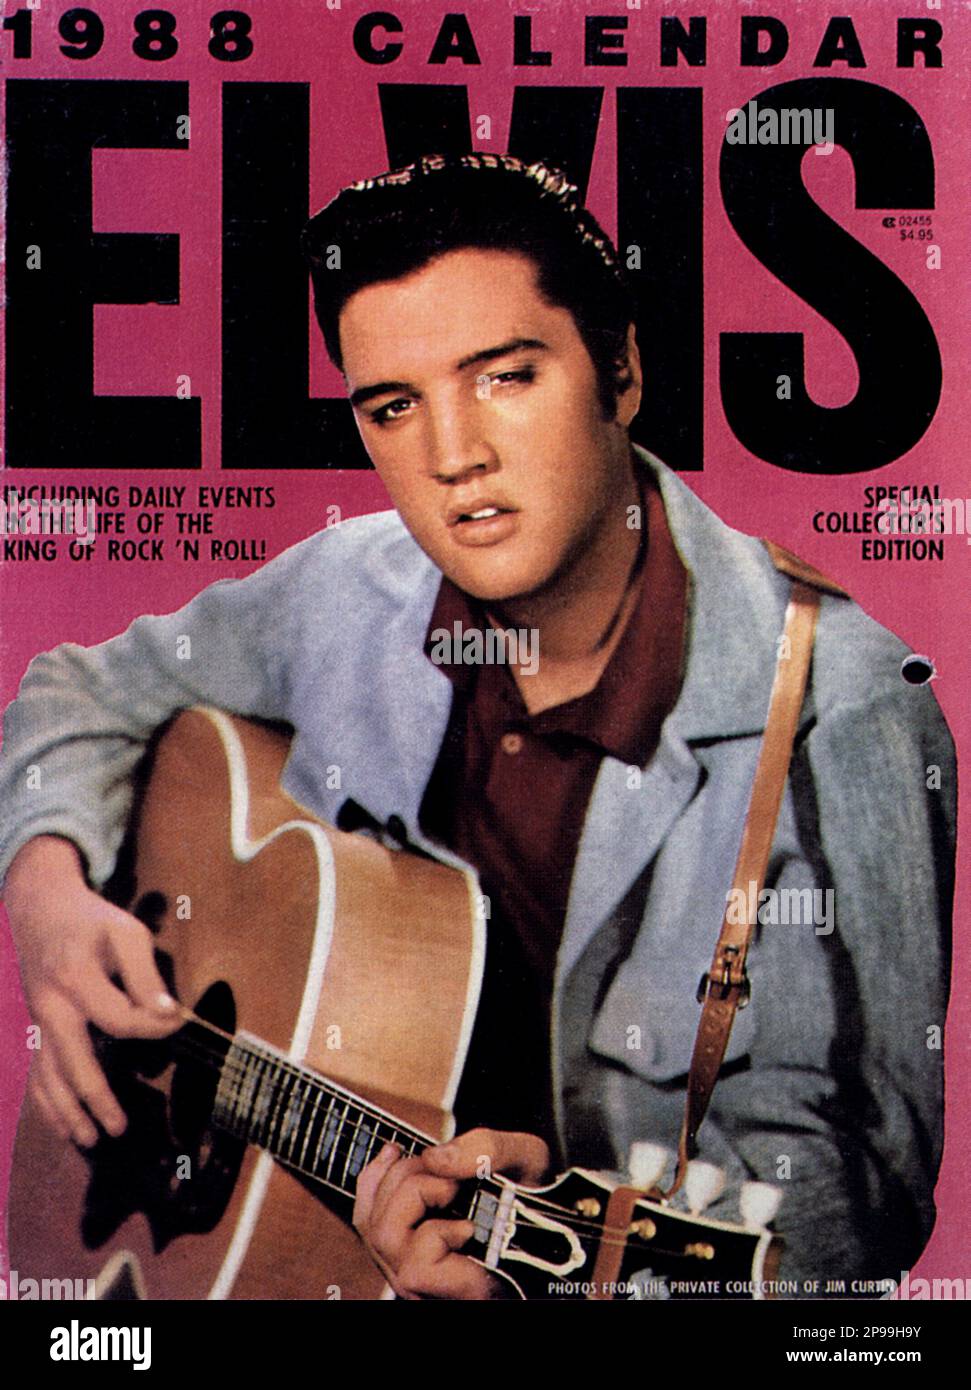 1988 : An USA  fan magazine completely devoted to celebrated King of Rock' n Roll  ELVIS PRESLEY ( 1935 - 1977 ) - POP MUSIC - ROCK - MUSICA LEGGERA - portrait - ritratto  - musicista - musician -  chitarra - guitar - cantante - singer - fanzine - cover - copertina ------  ARCHIVIO GBB Stock Photo